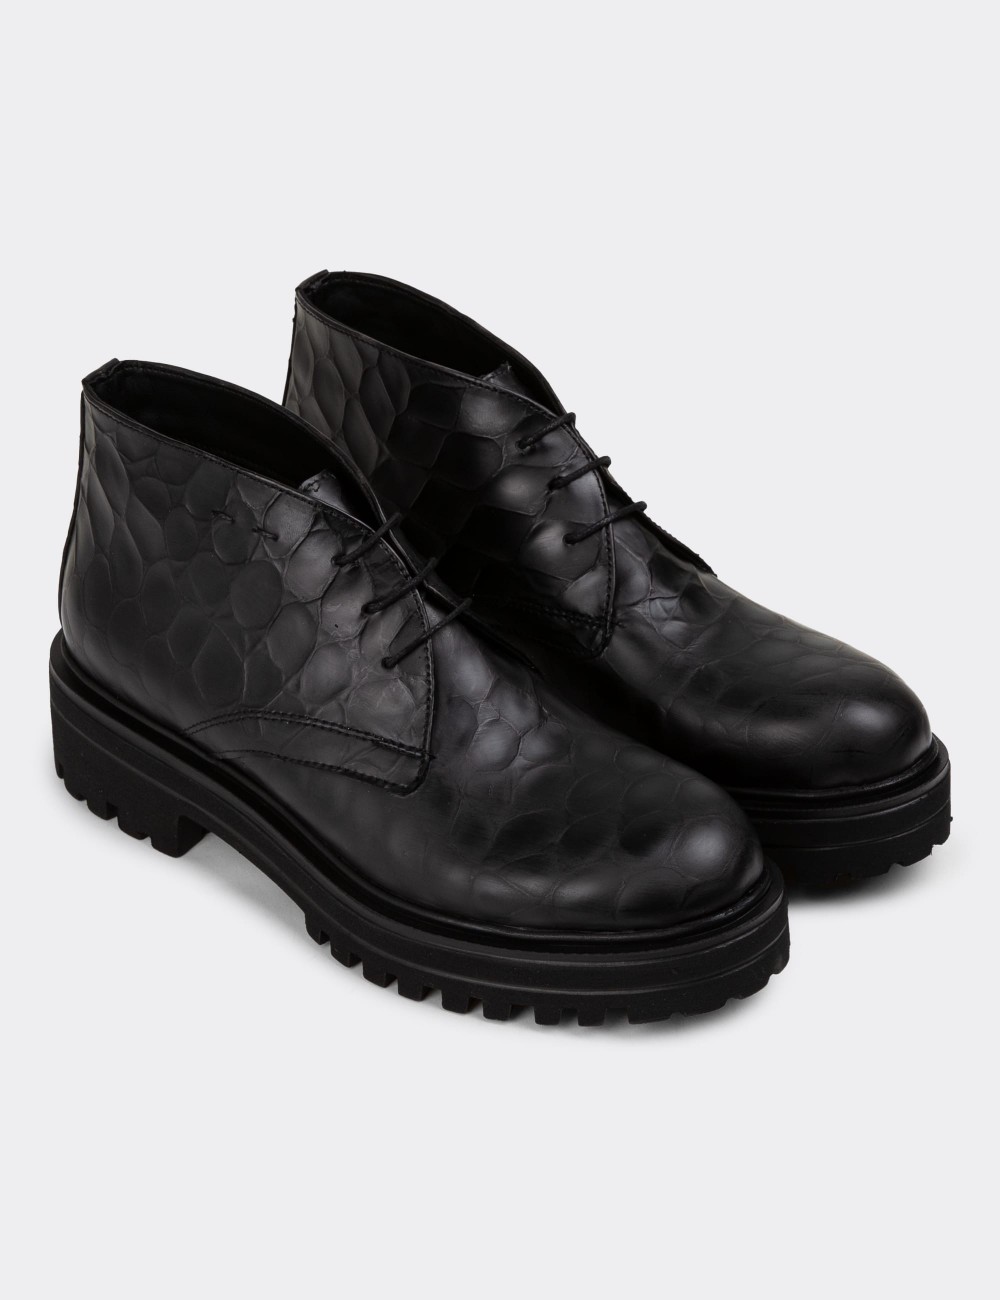 Black Leather Desert Boots - 01847ZSYHE08